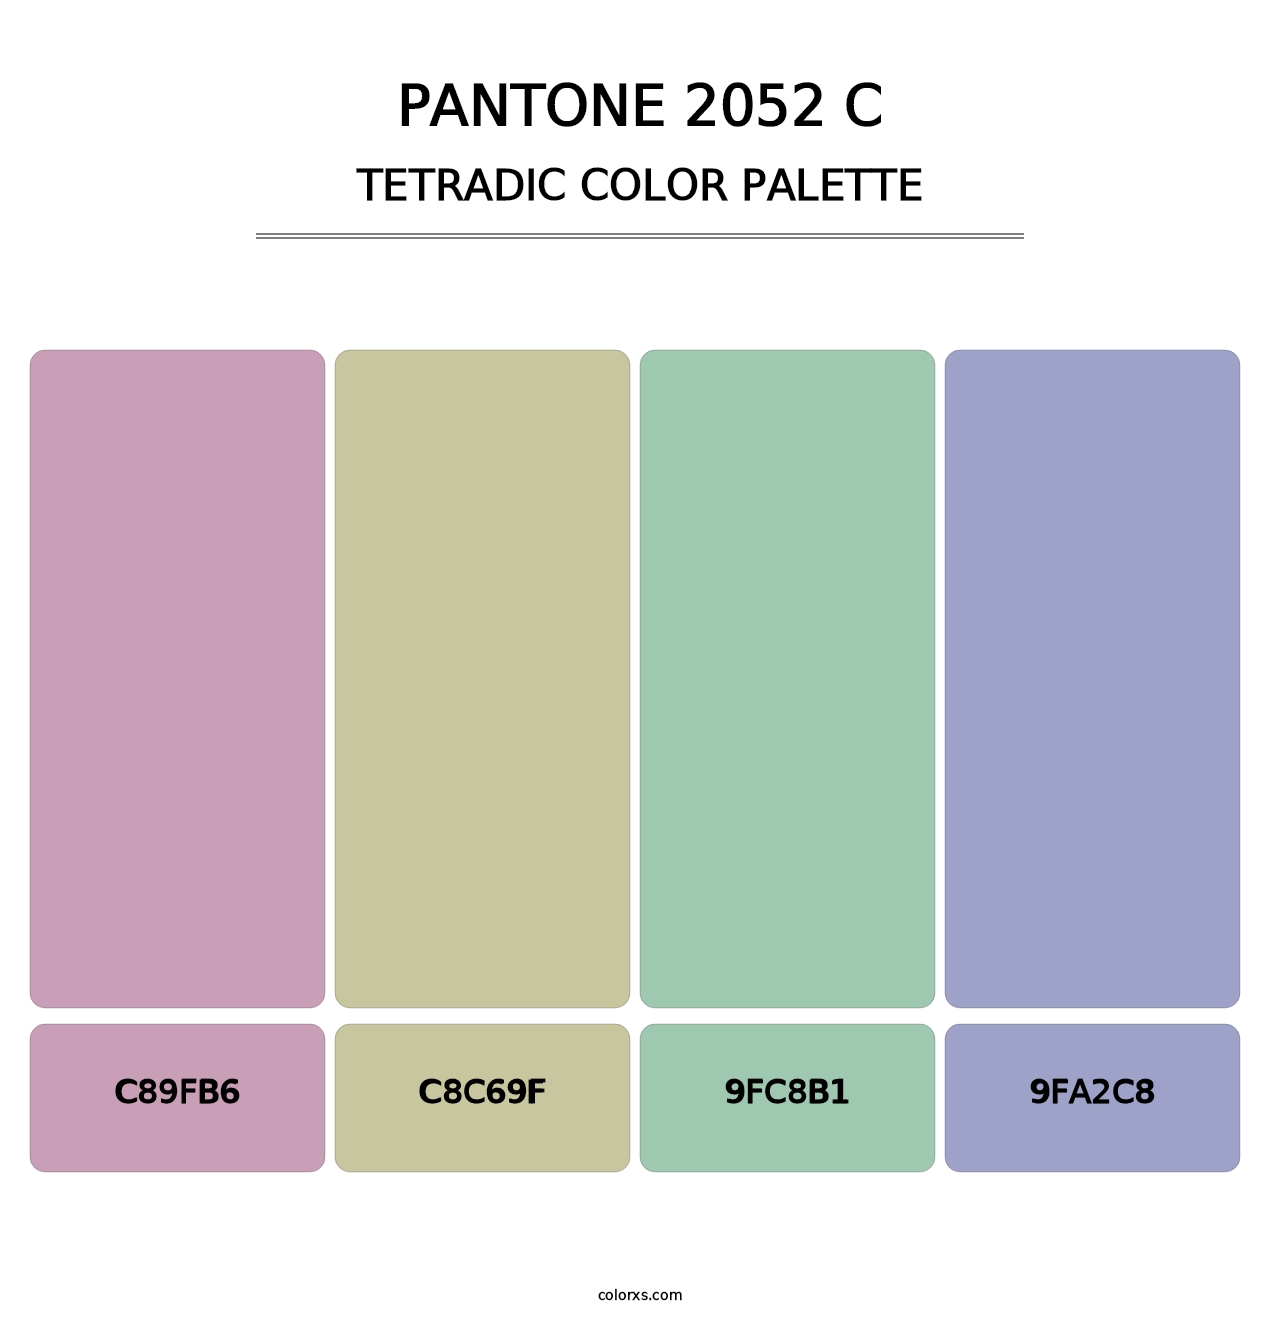 PANTONE 2052 C - Tetradic Color Palette